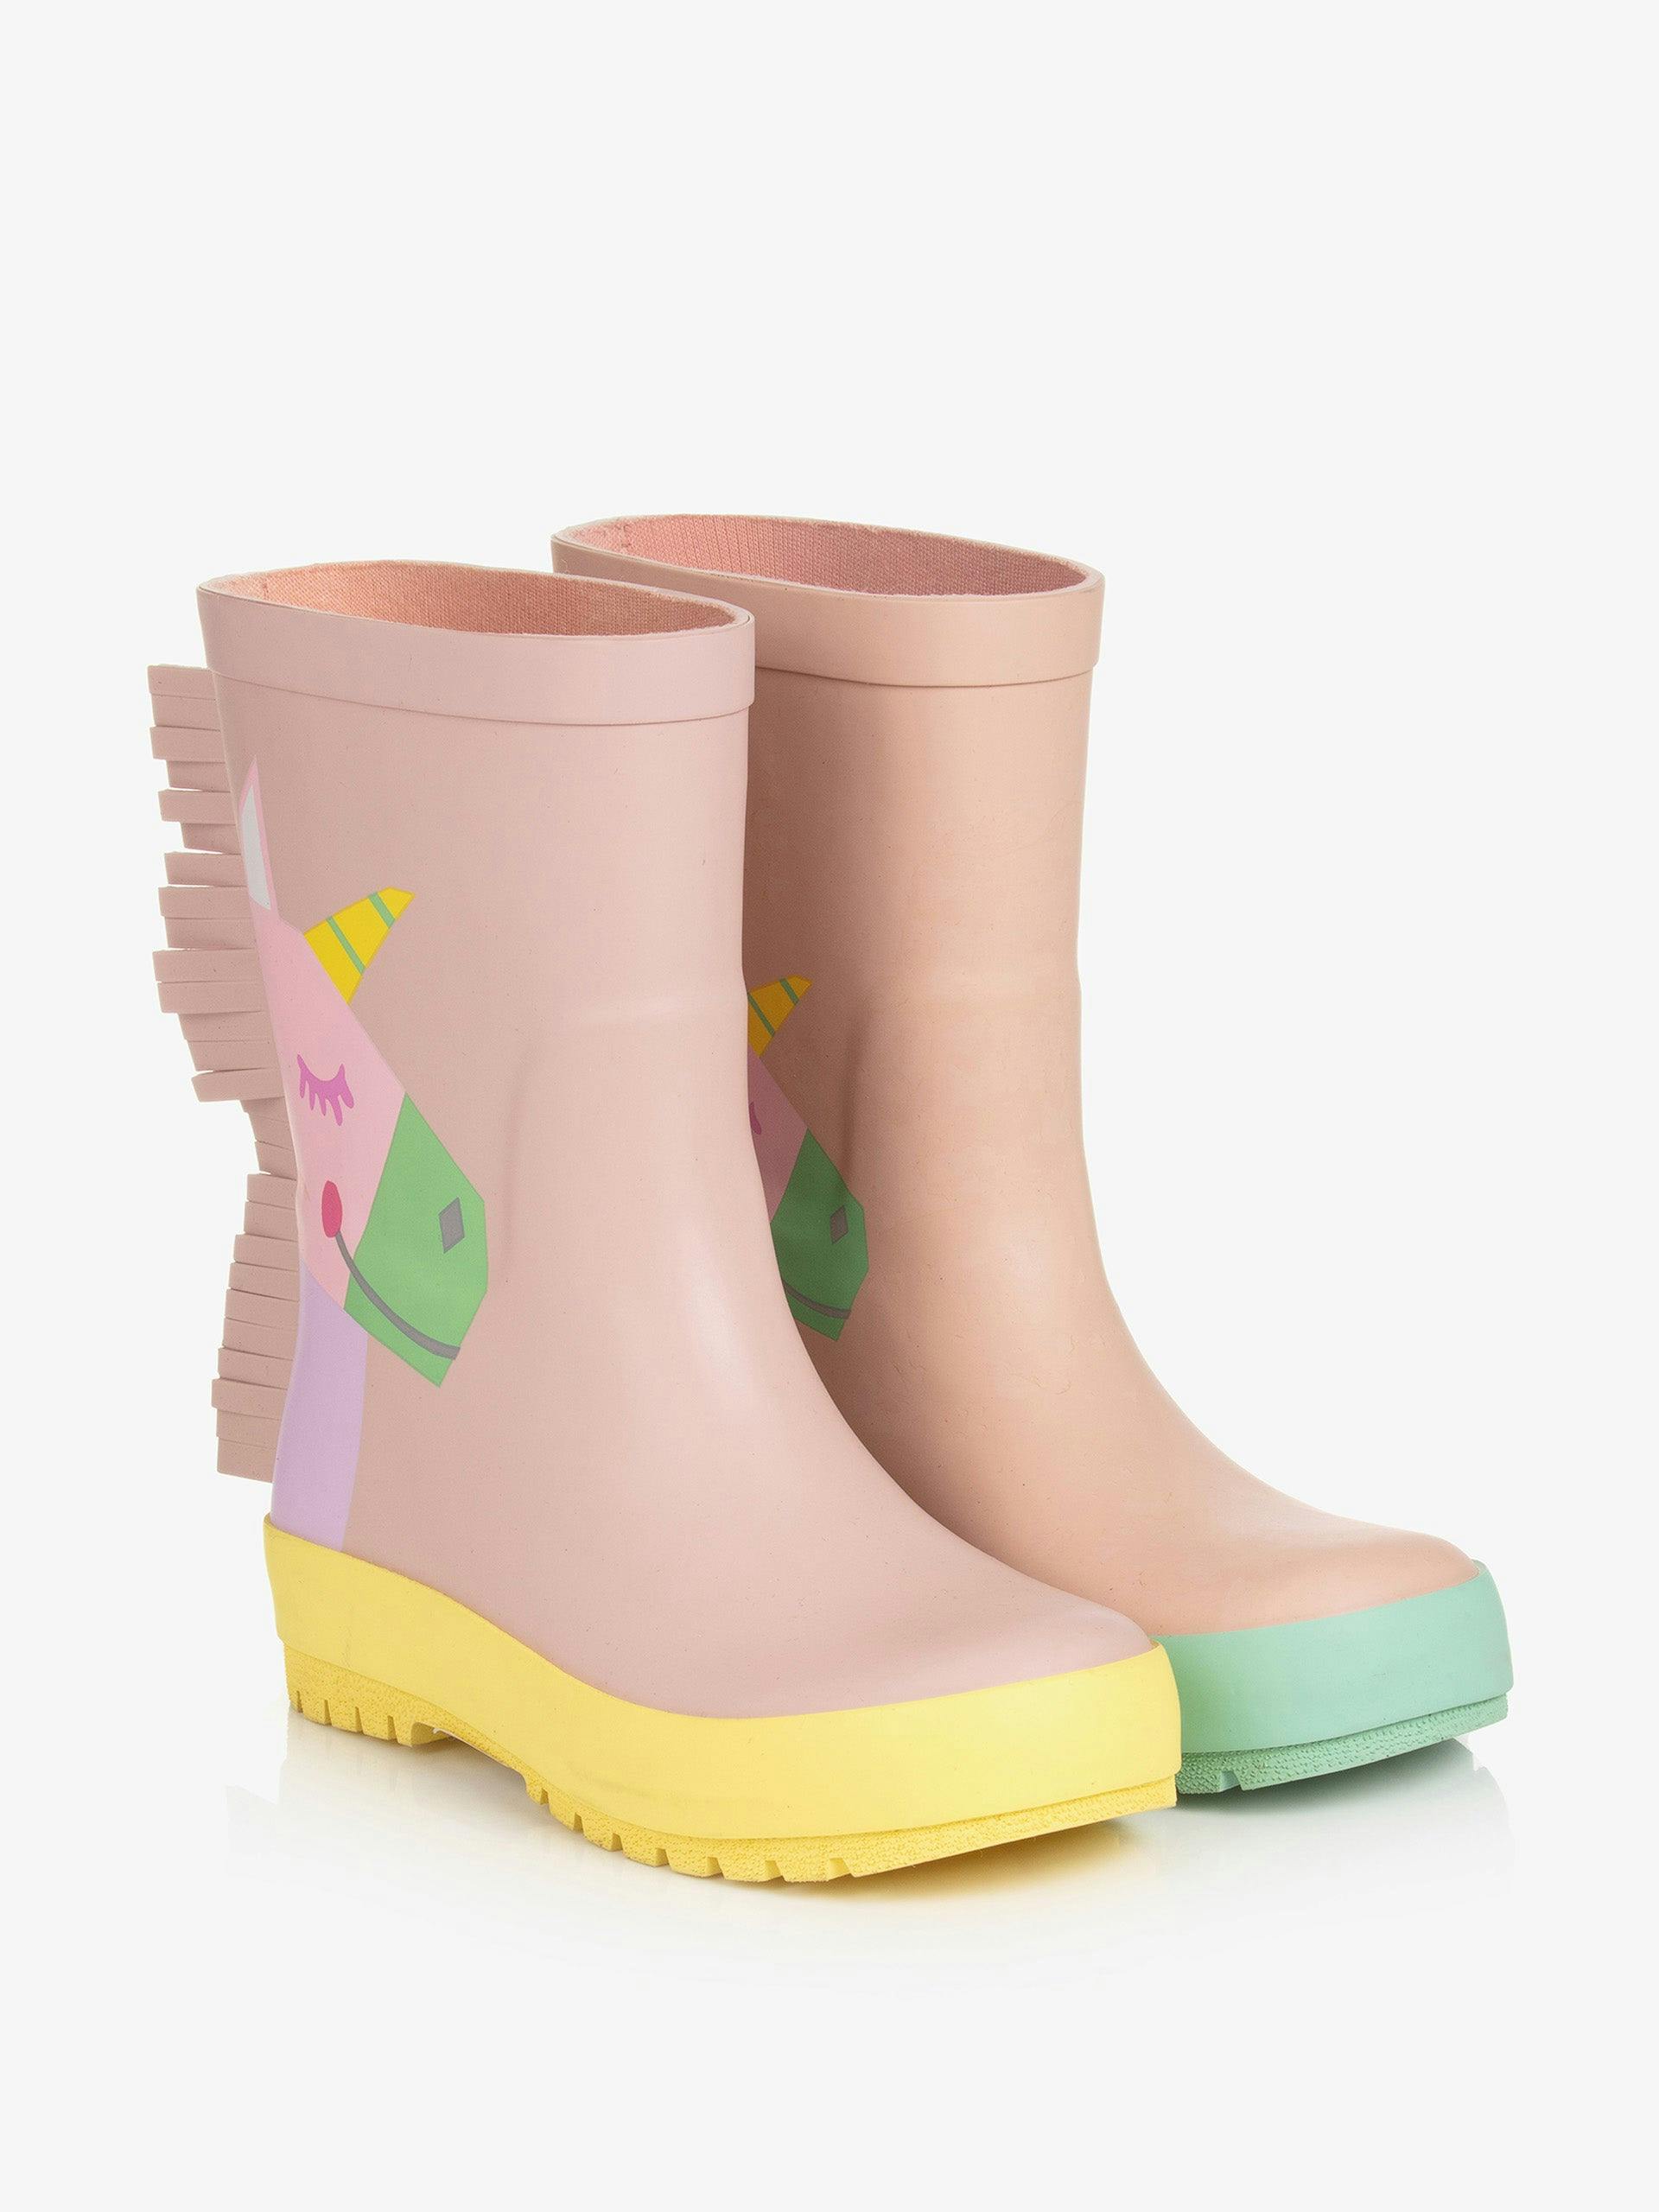 Pink unicorn rain boots